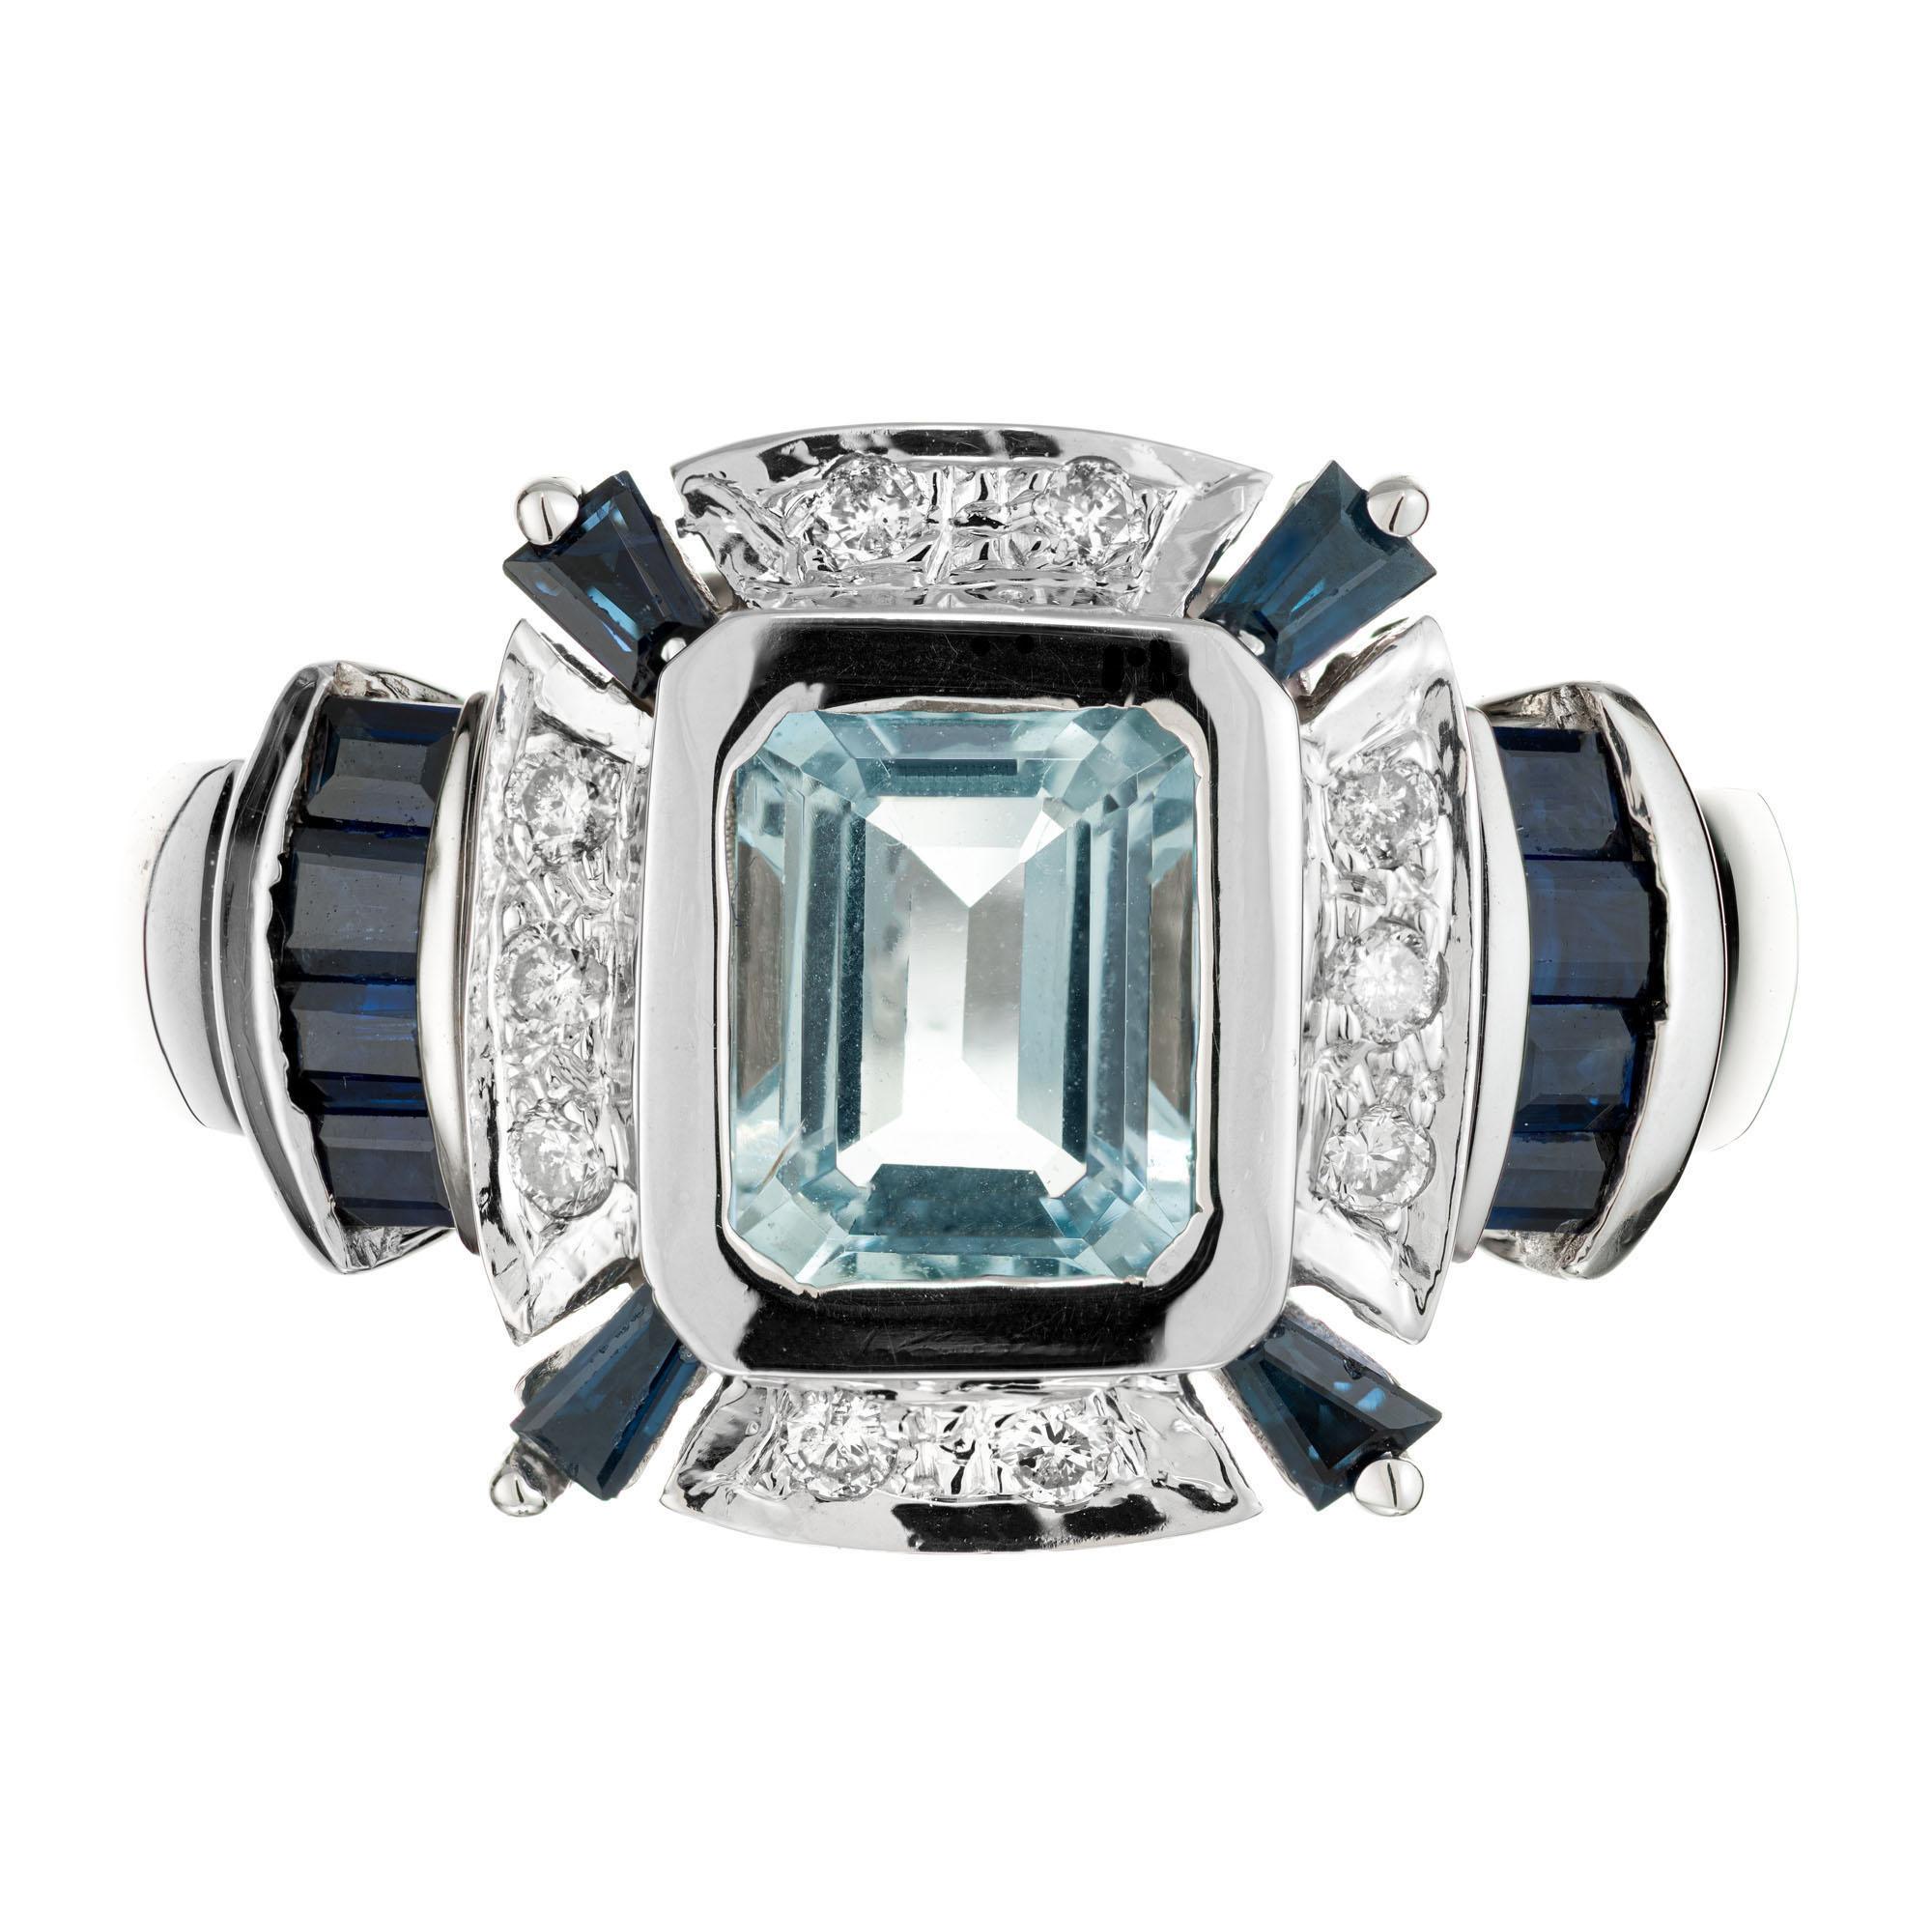 Emerald cut aqua Art Deco cocktail style ring. 1.00 Blue center Aqua with 12 baguette and 10 round diamonds.

1 rectangular blue aquamarine, VS approx. 1.00ct
12 baguette dark blue sapphires, SI approx. .44cts
10 round brilliant cut diamonds, G-H